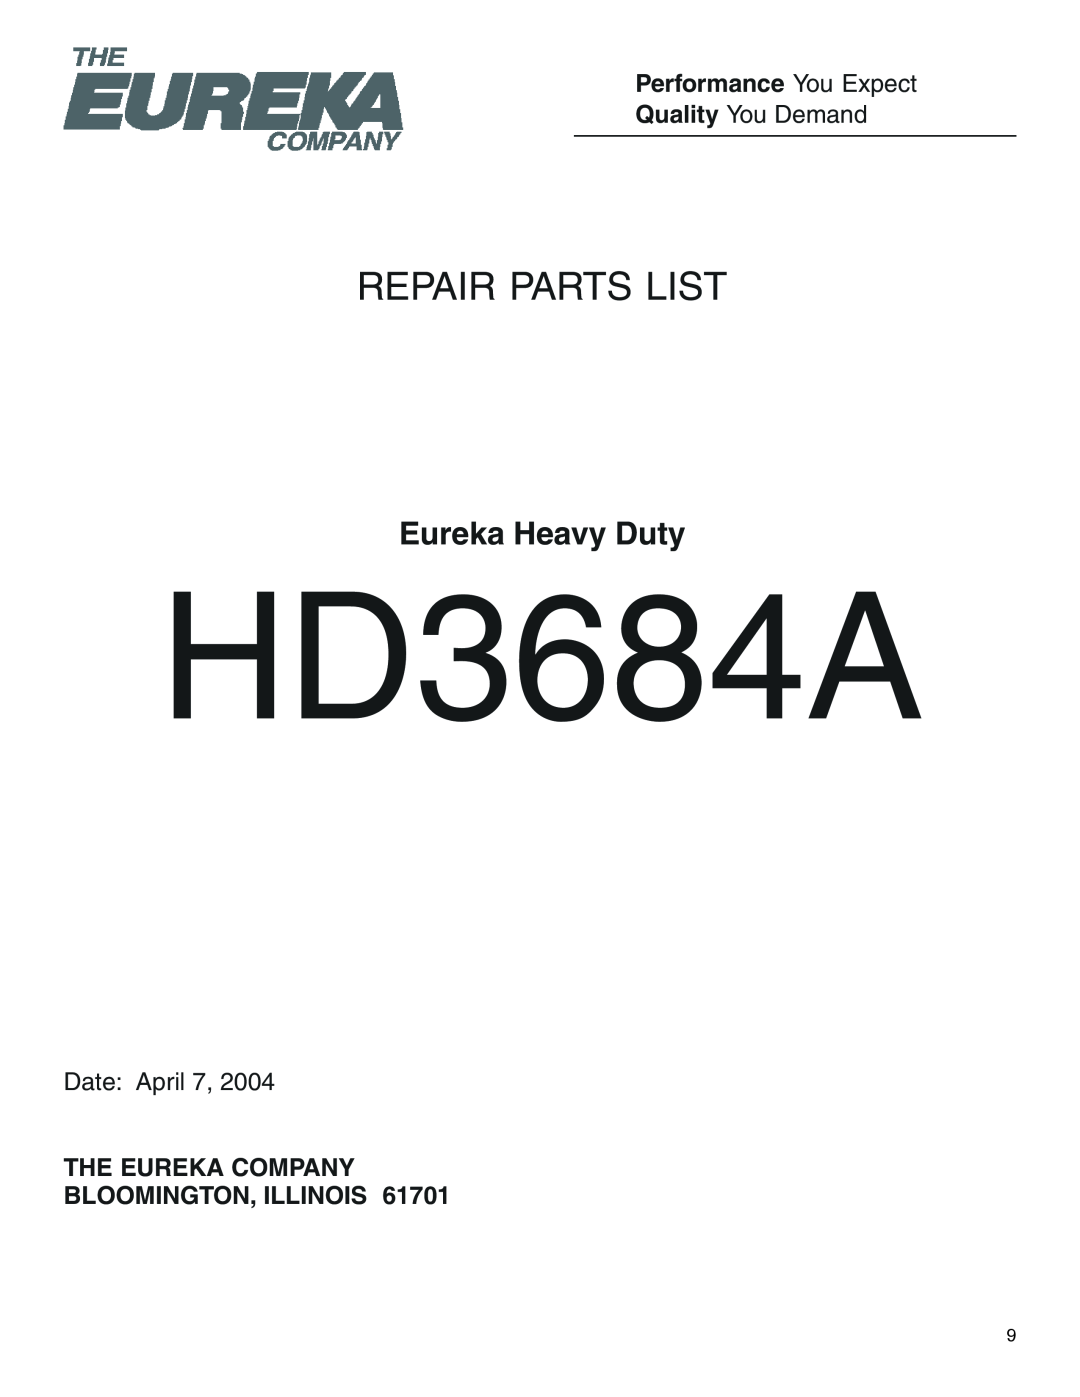 Eureka HD3684A warranty Eureka Heavy Duty, Repair Parts List, Performance You Expect, Quality You Demand, Date April 7 